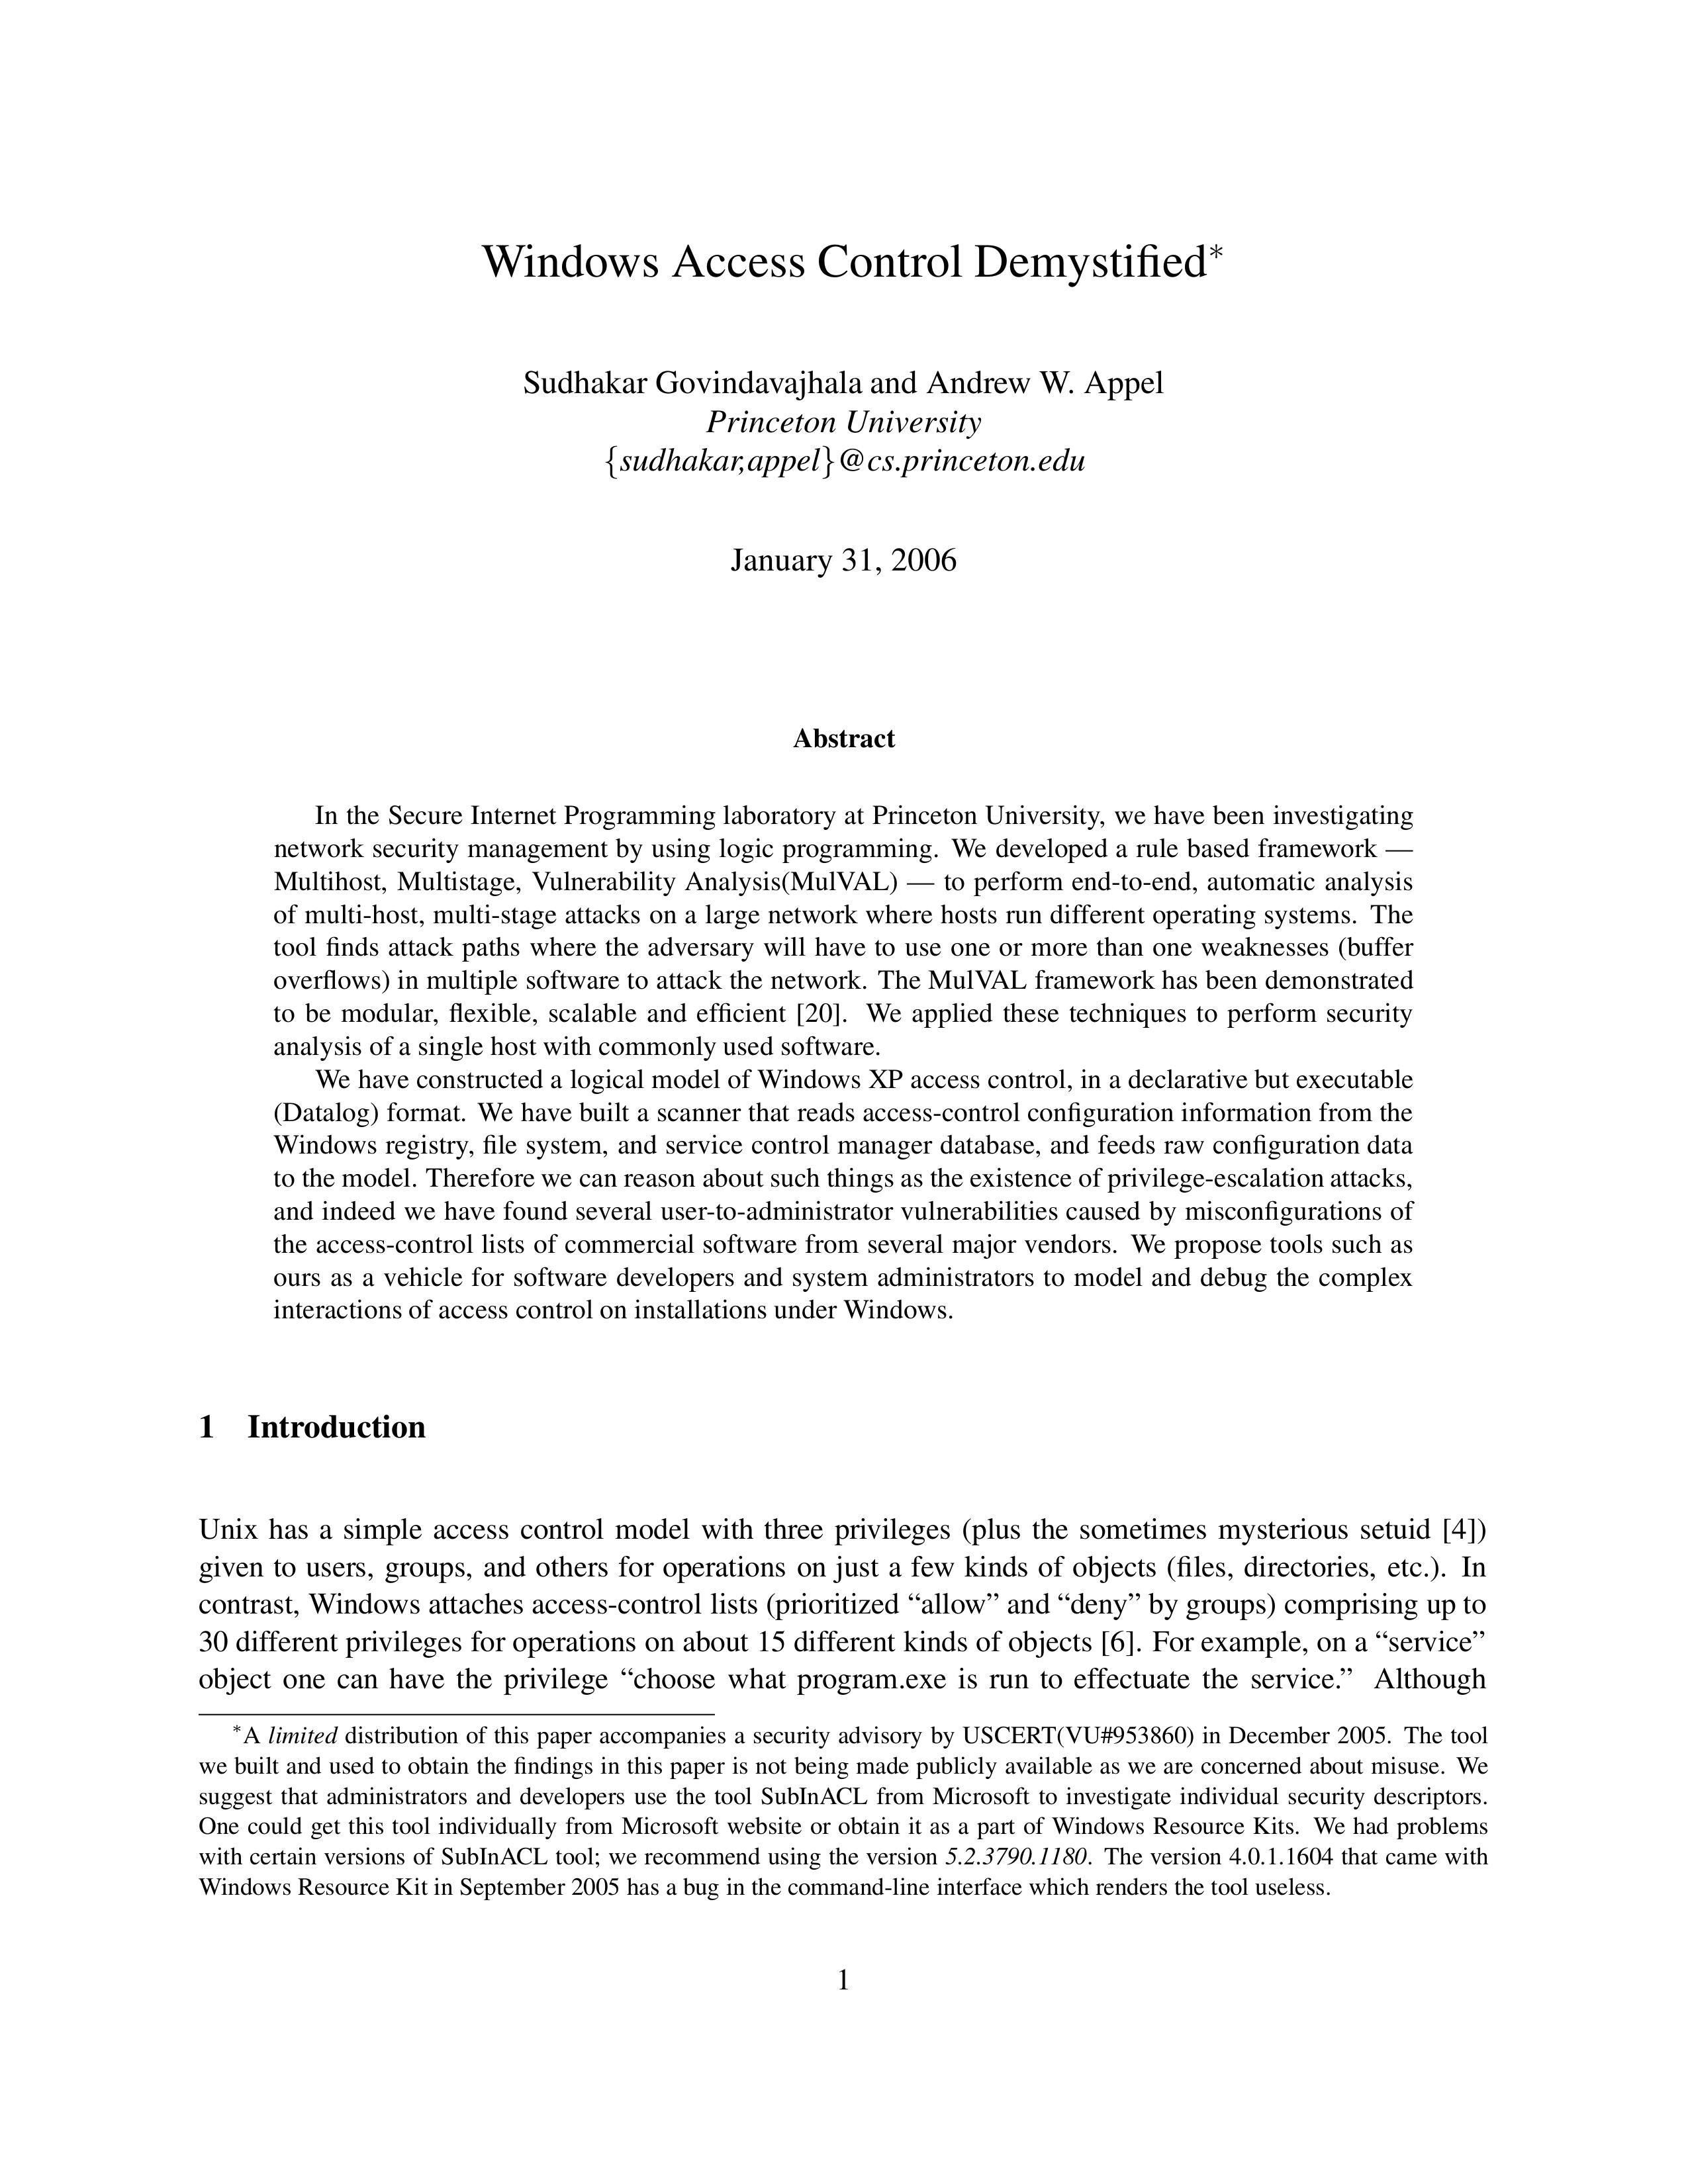 Windows Access Control Demystified by Sudhakar Govindavajhala and Andrew W. Appel